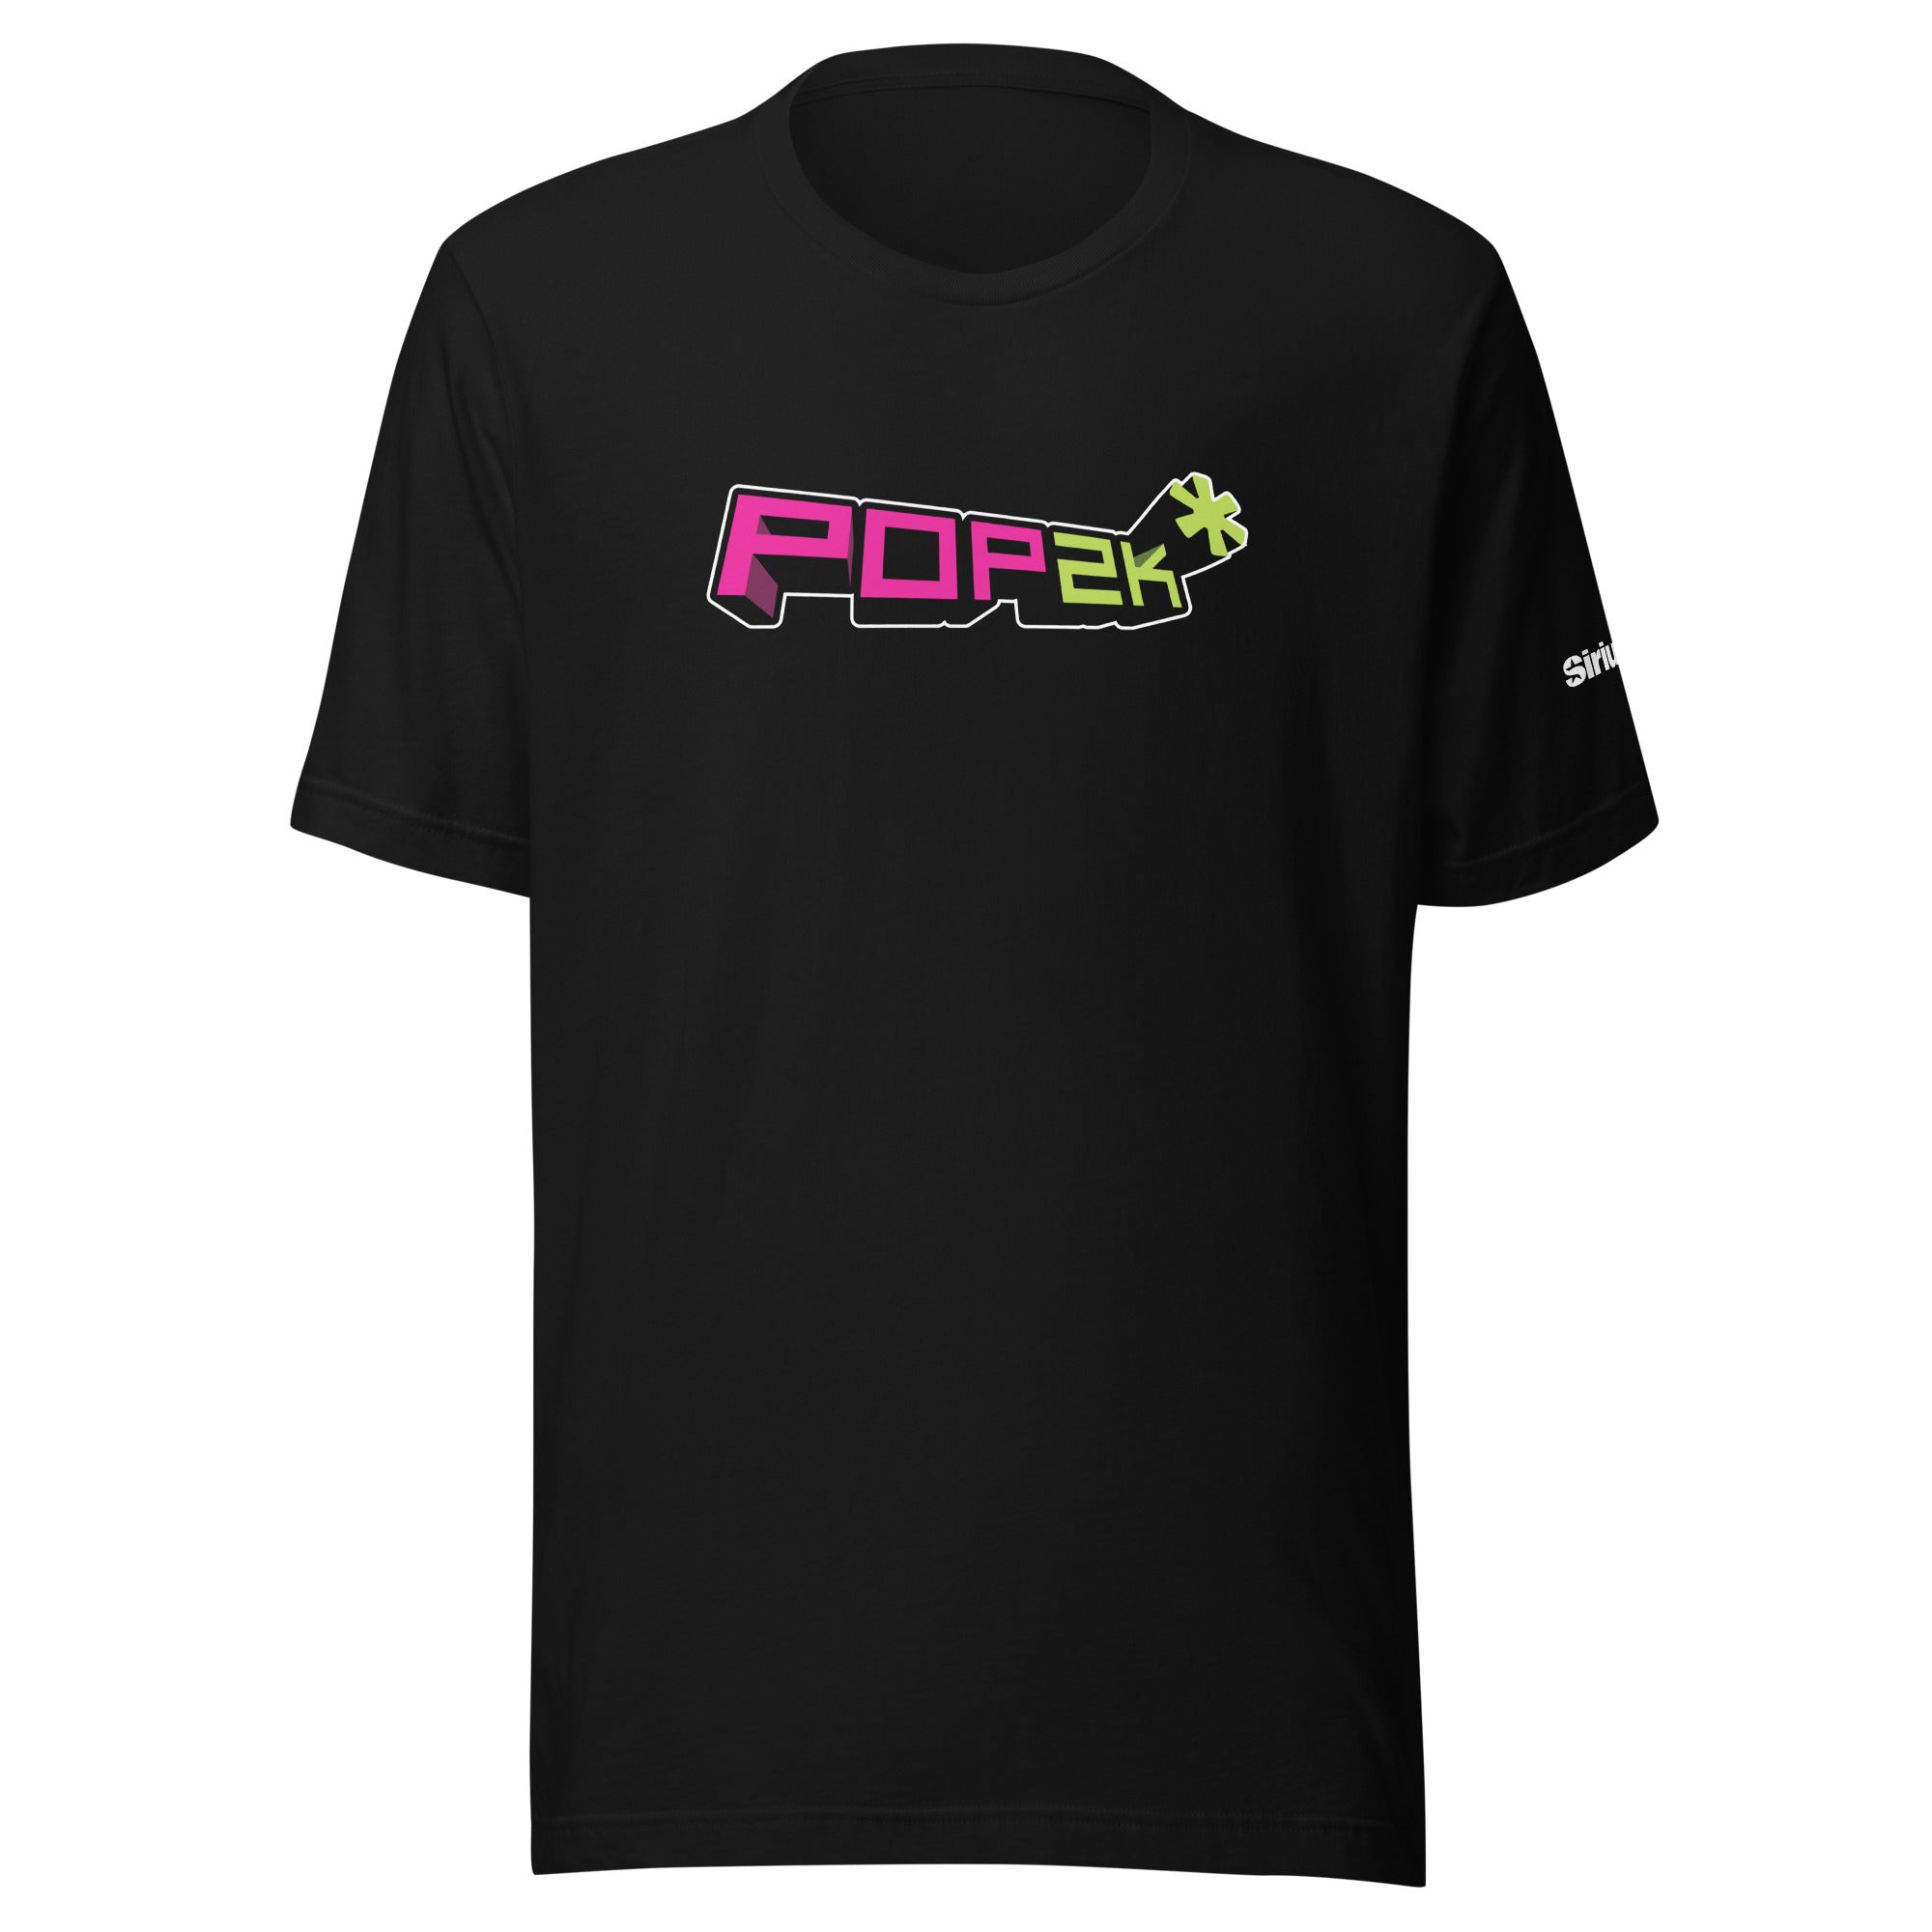 Pop 2k: T-shirt (Black)